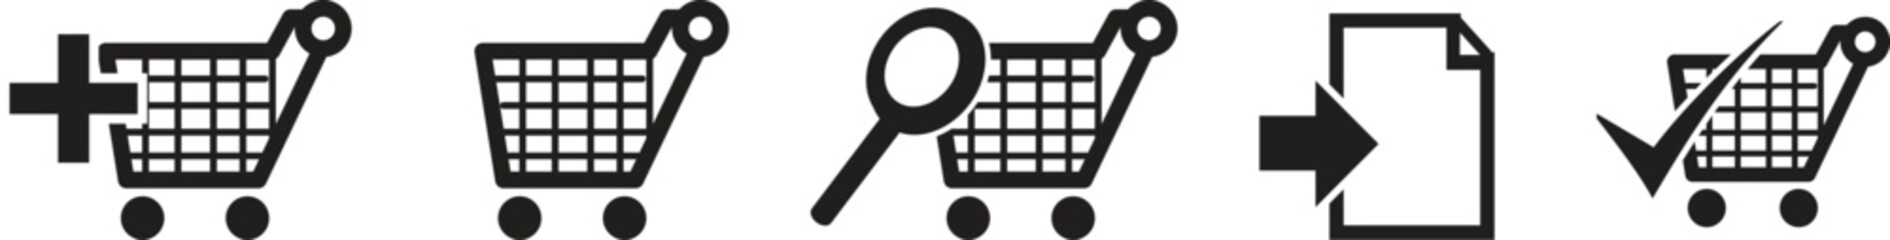 Vector illustration shopping cart online shop icon set isolated on white background